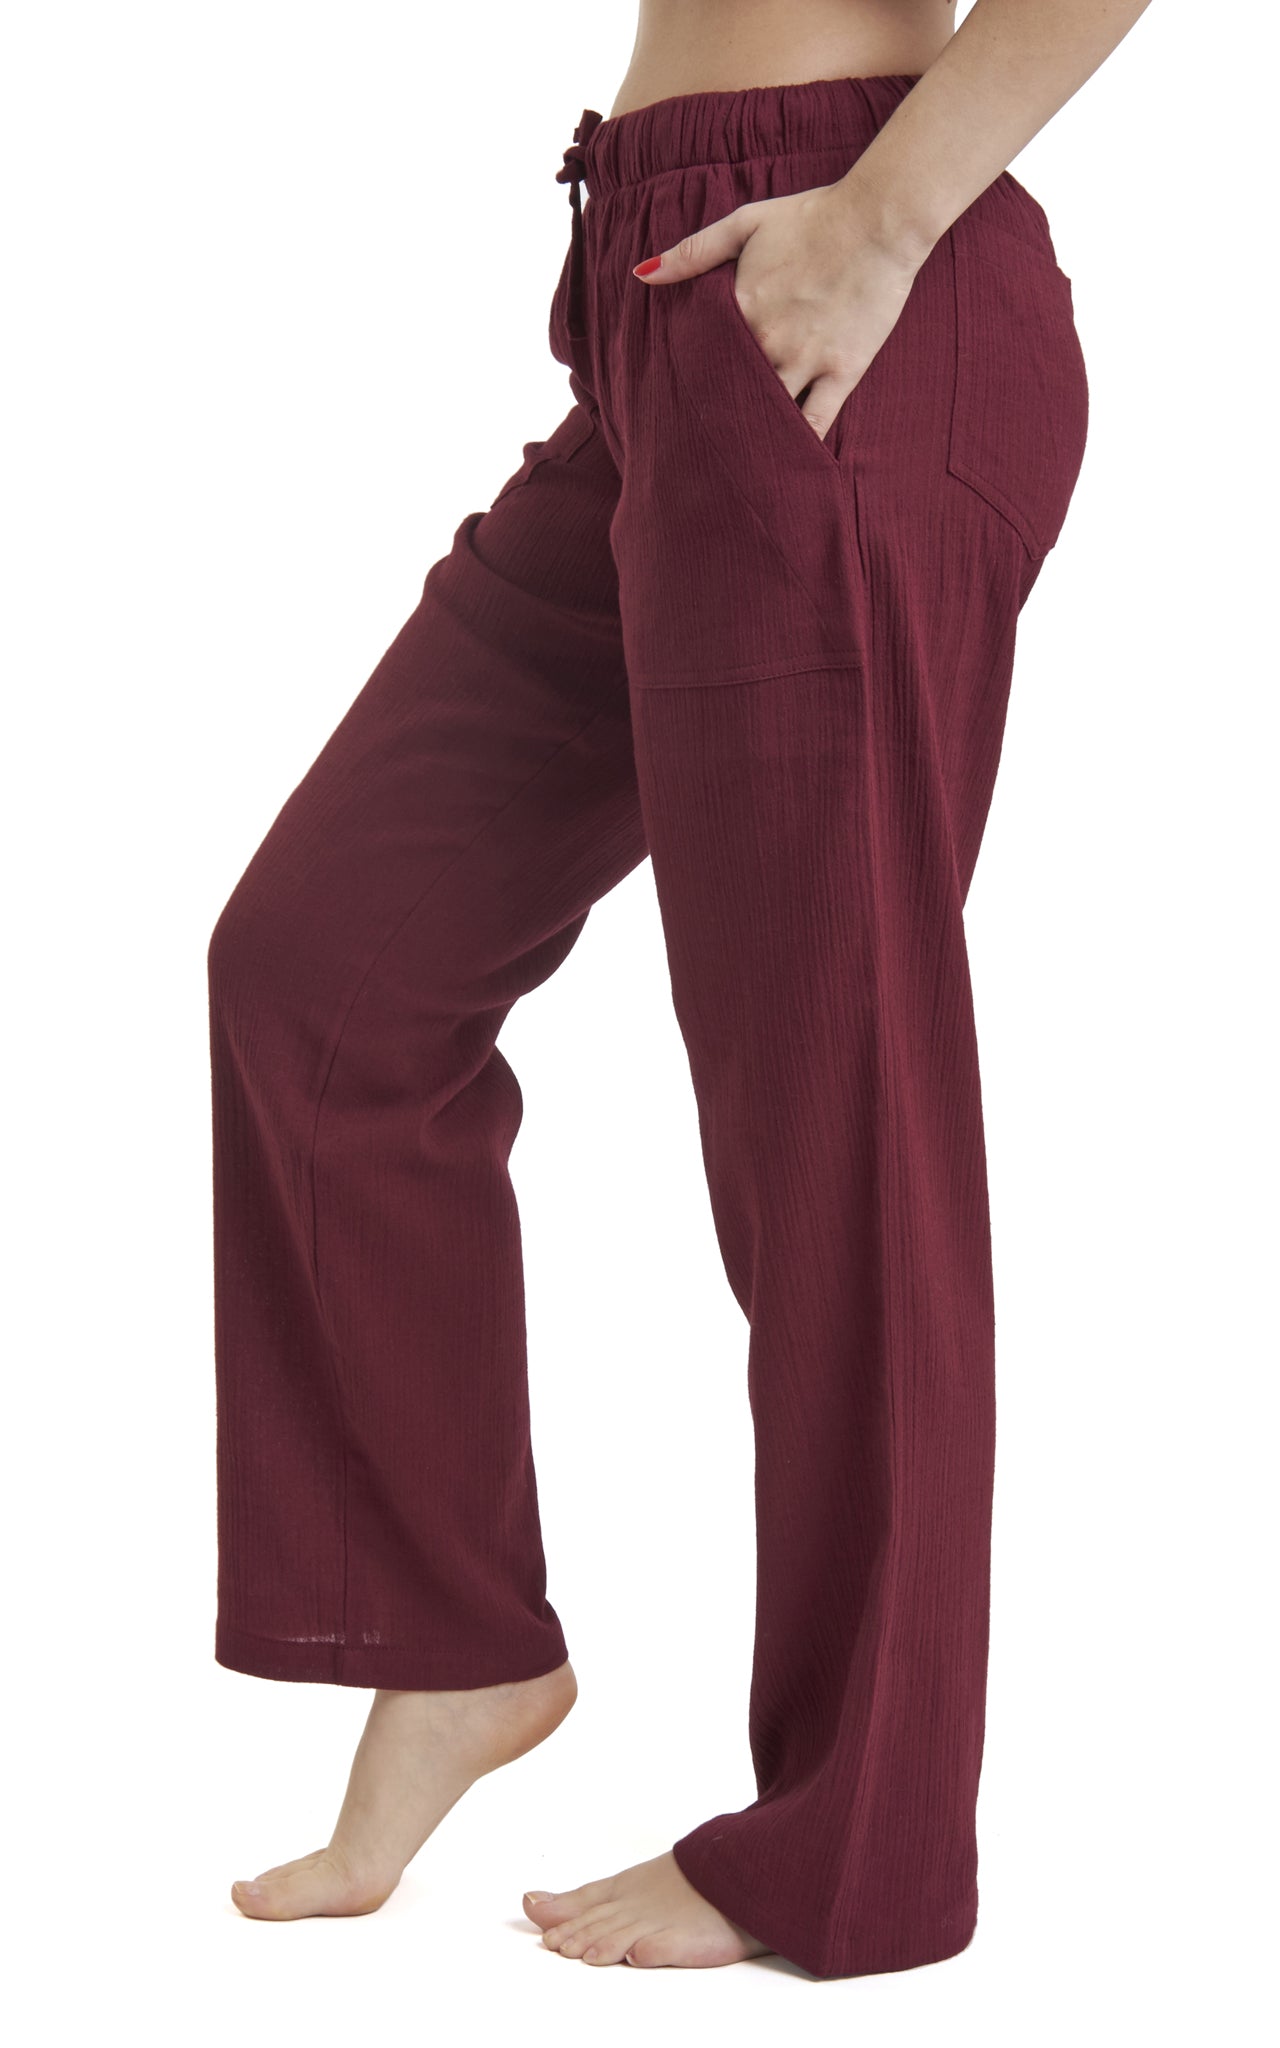 Women's Gauze Cotton PJ & Beach Pants with Pockets (Burgundy)